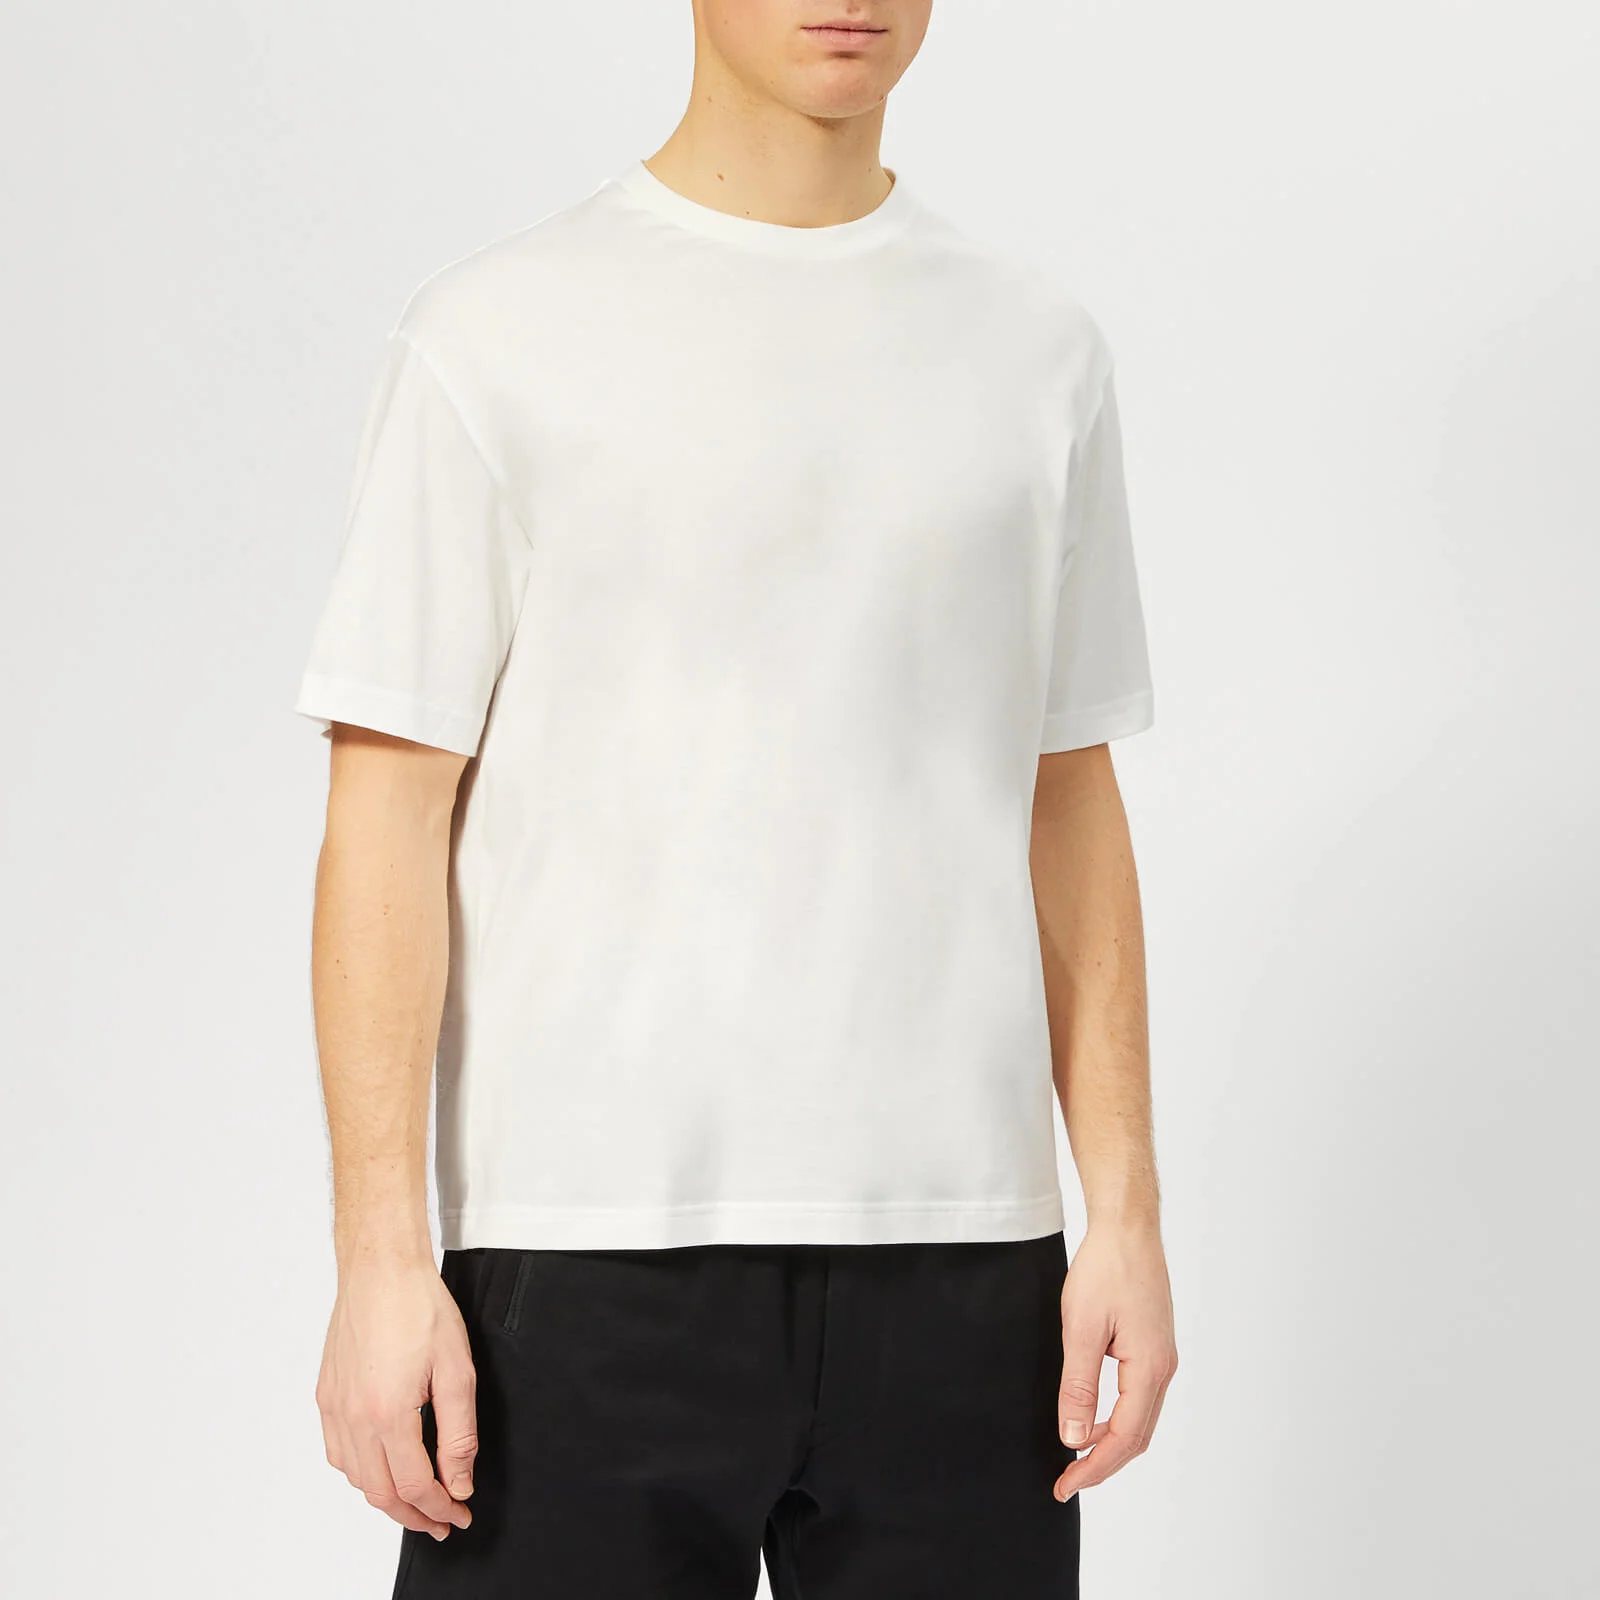 Y-3 Men's Signature Graphic Short Sleeve T-Shirt - Core White Image 1